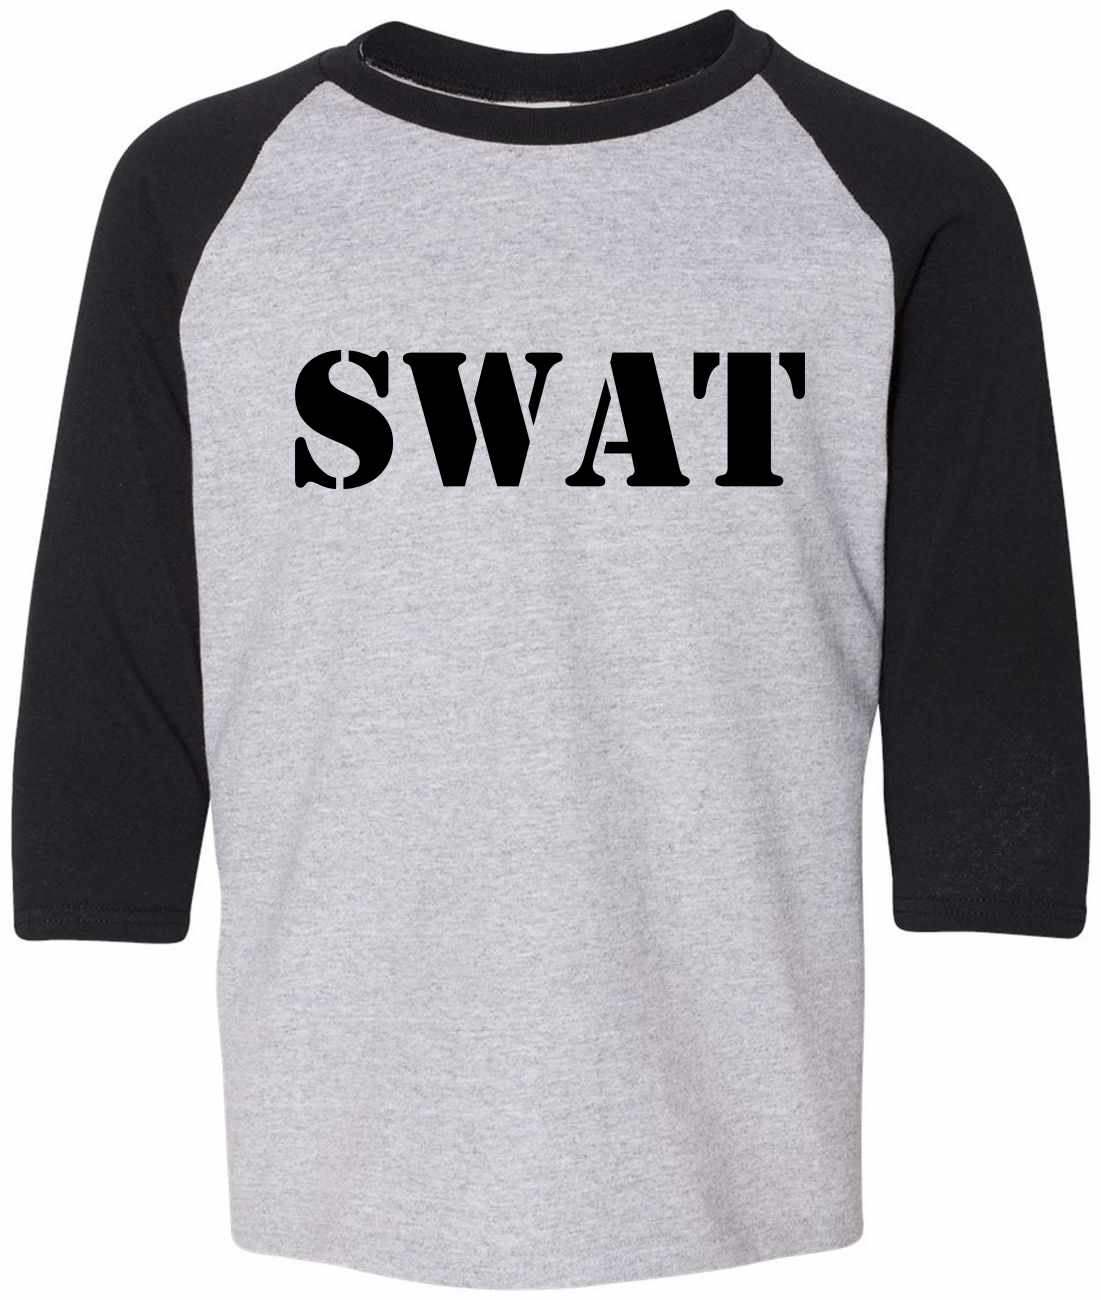 SWAT on Youth Baseball Shirt